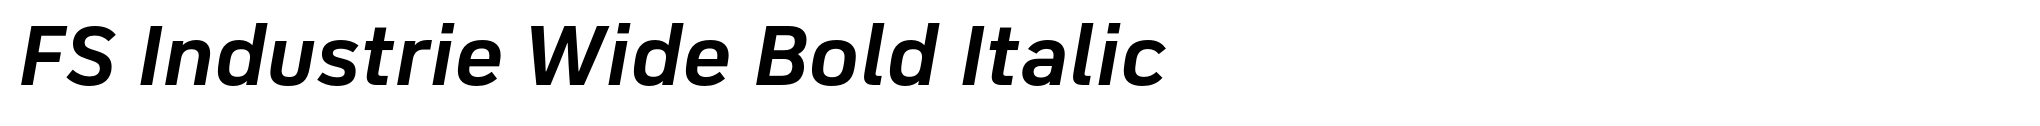 FS Industrie Wide Bold Italic image